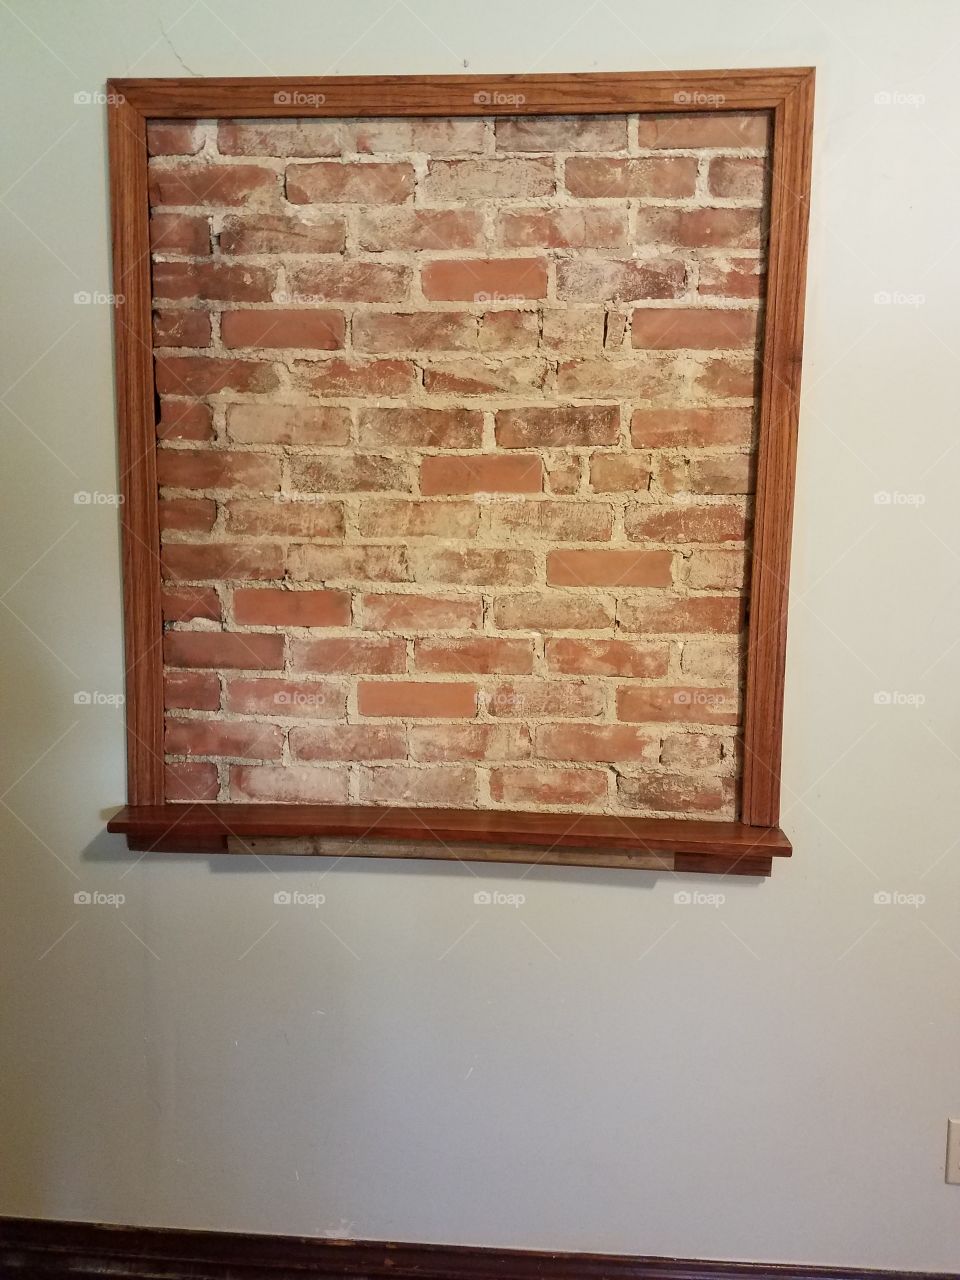 My own brick wall